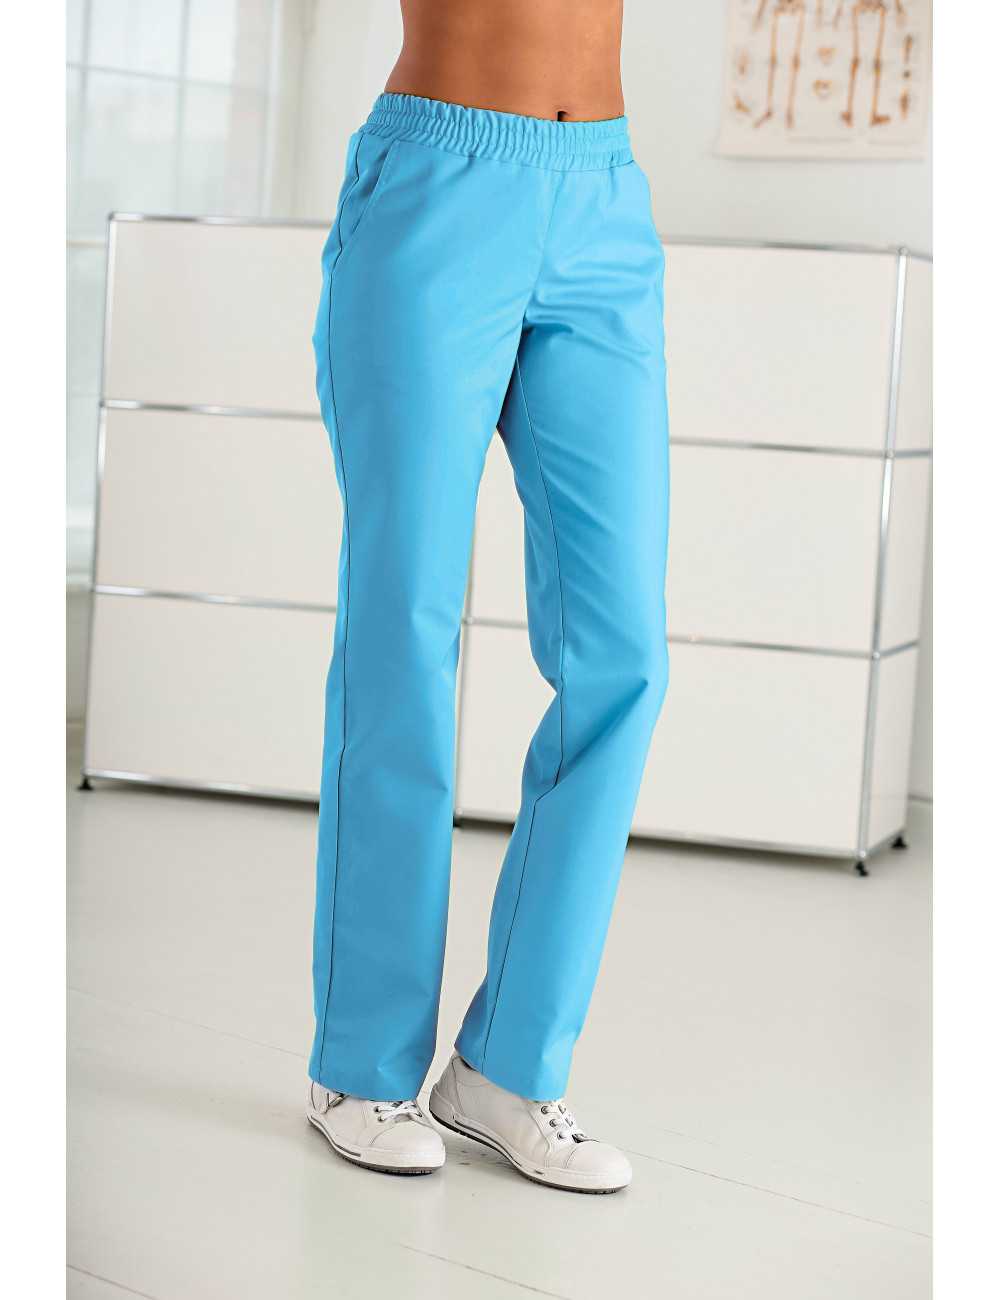 Pantalon médical femme "Estelle", Clinic dress